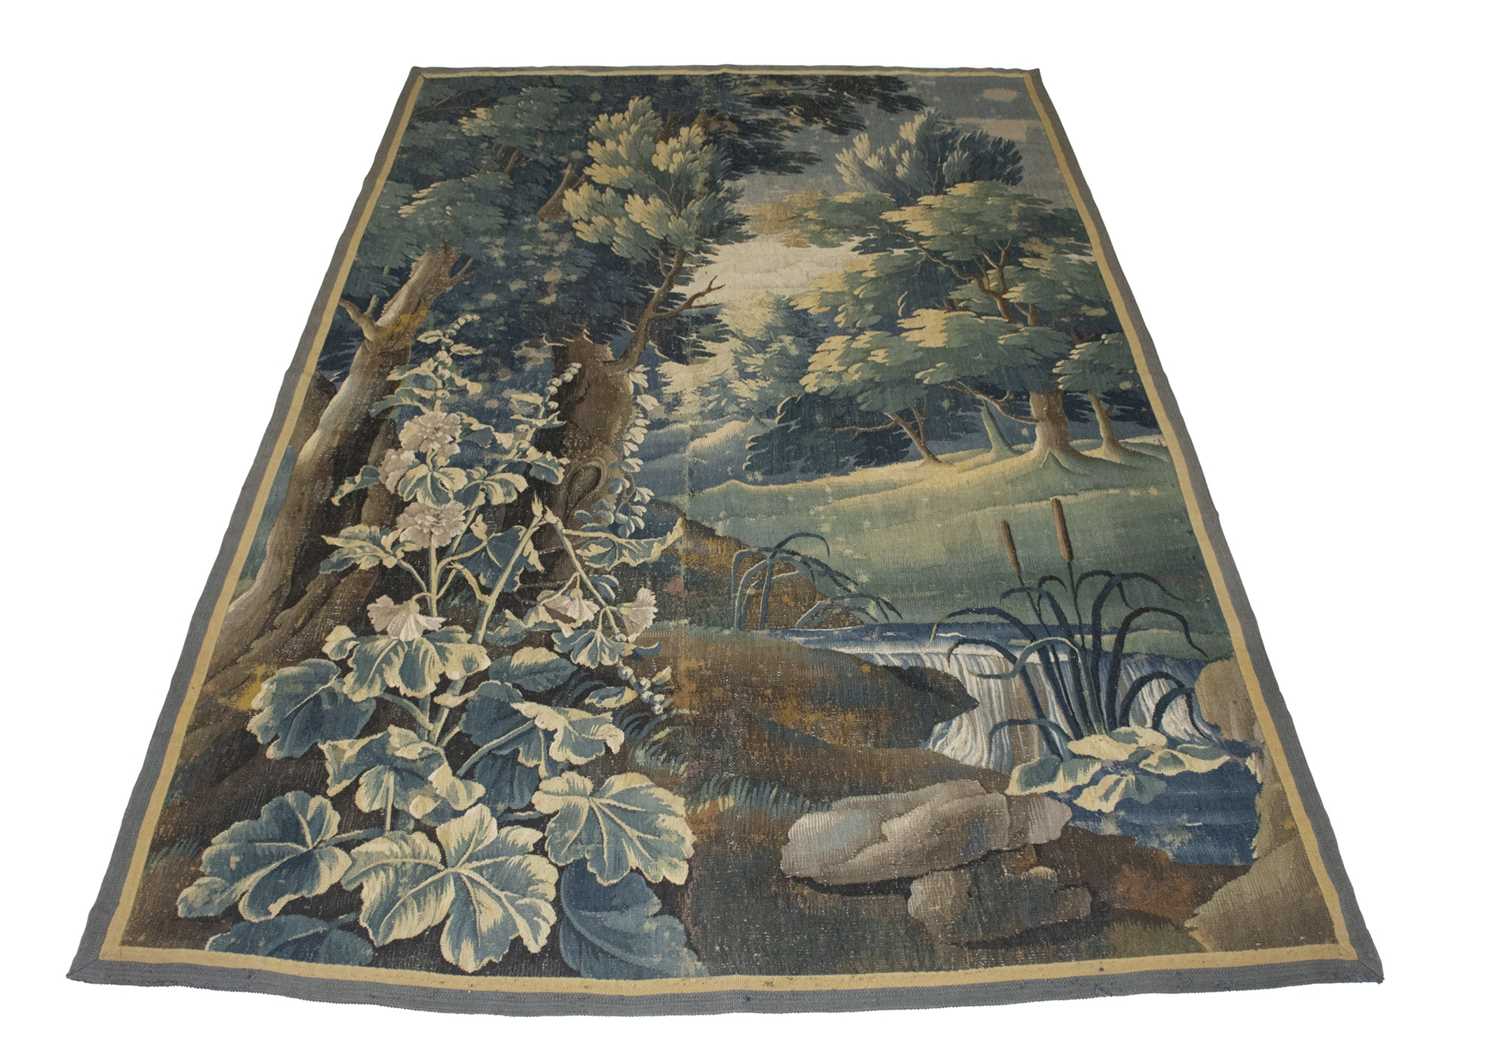 Lot 524 - 18th century Aubusson Verdure Tapestry Panel